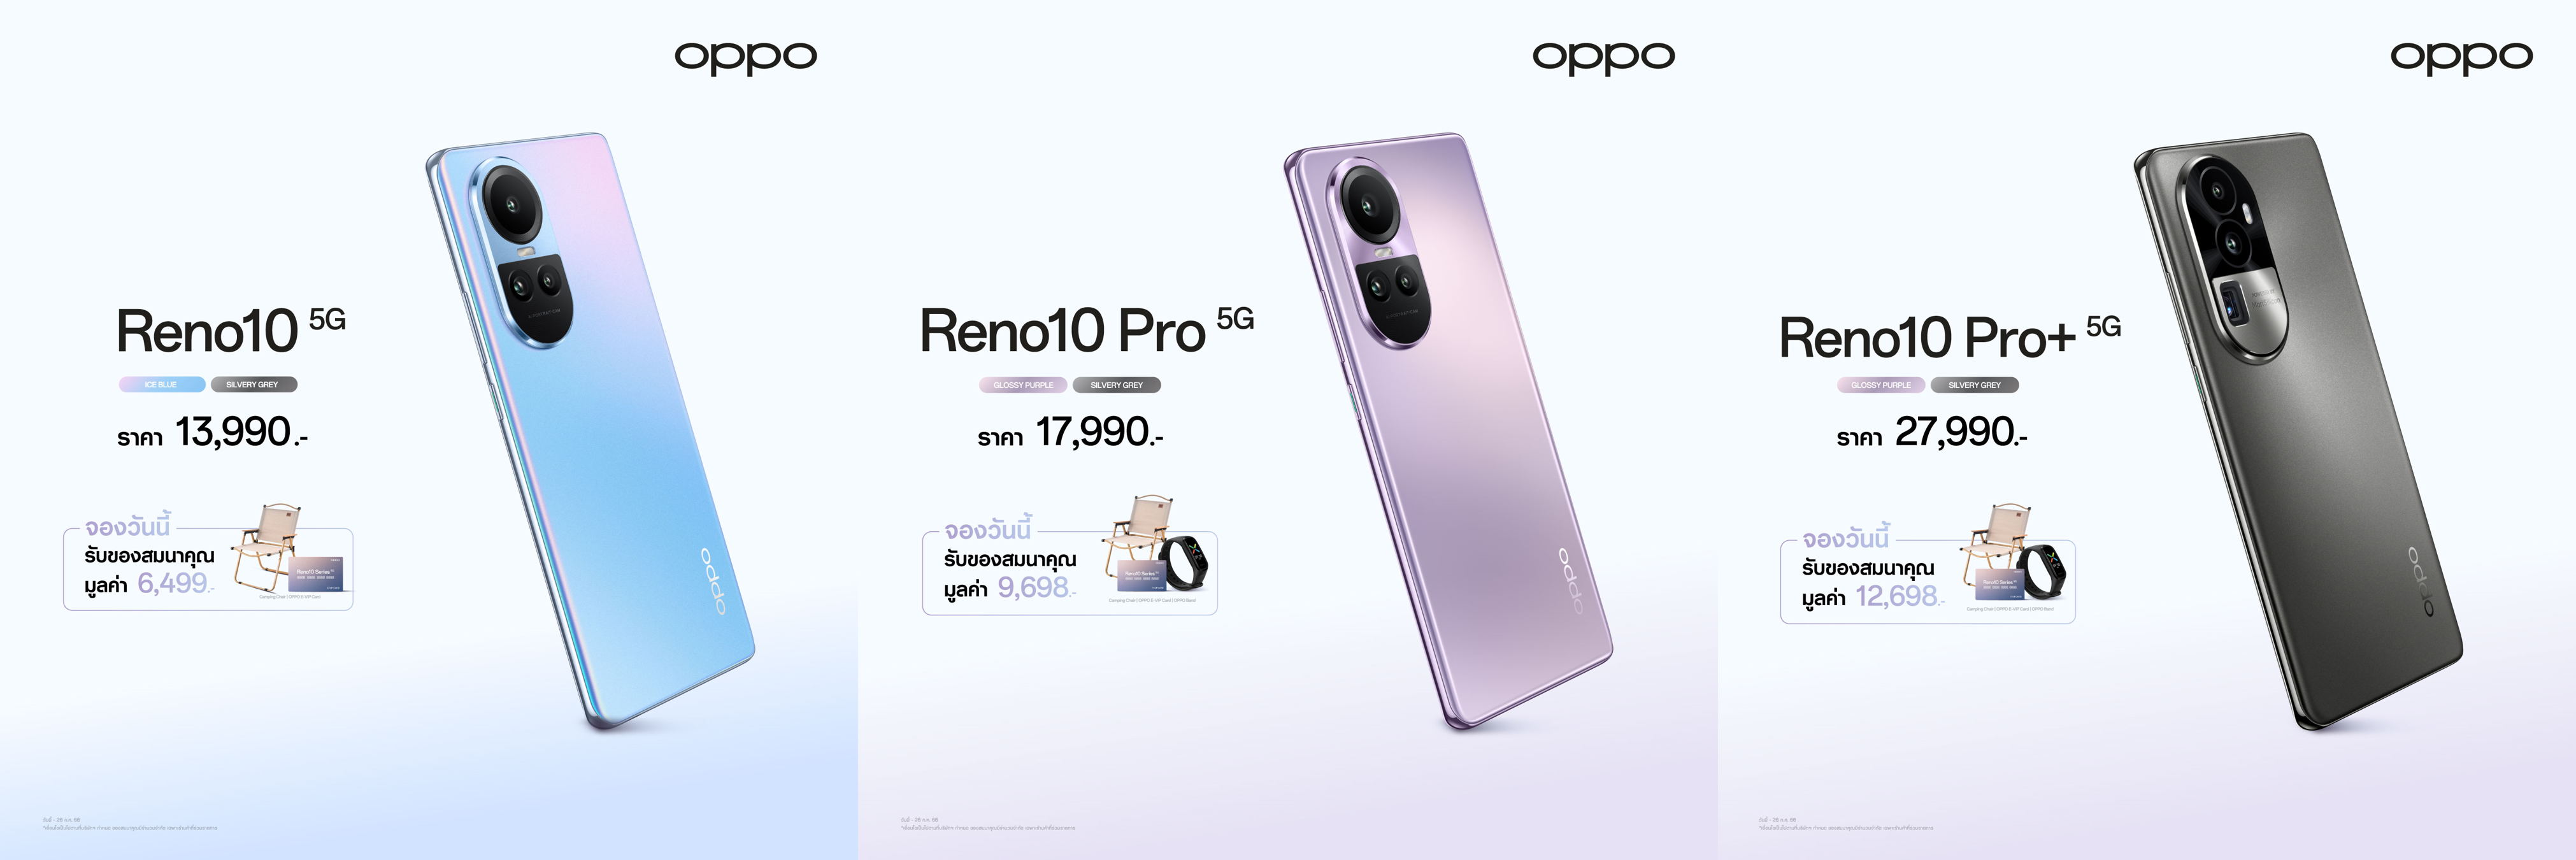 OPPO Reno10 Series 5G Price | OPPO | รีวิว OPPO Reno10 Series 5G ครั้งแรกกับสมาร์ตโฟนระดับกลาง ที่มากับ 